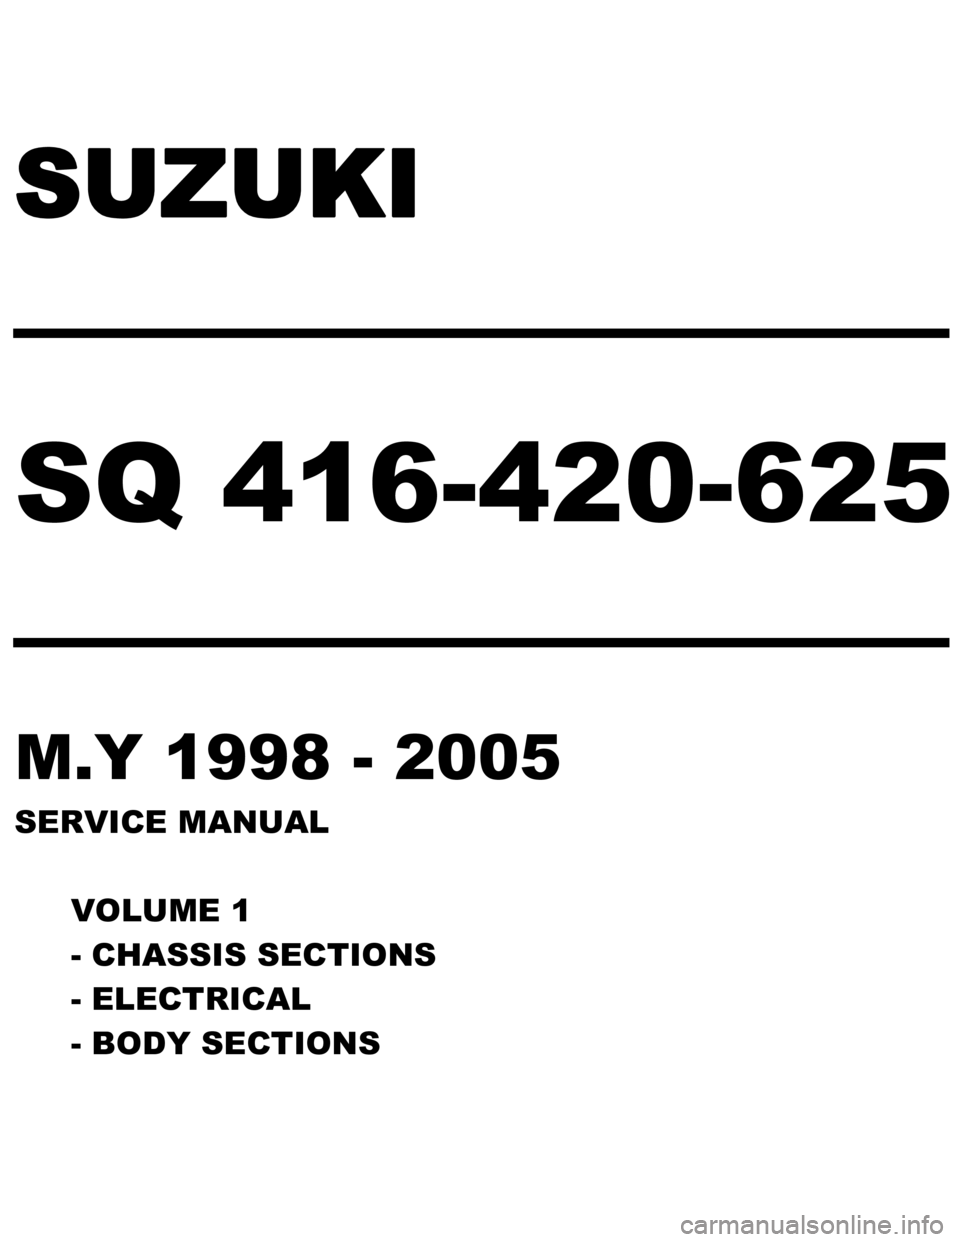 SUZUKI GRAND VITARA 2001 2.G Service Workshop Manual 
SUZUKI  
──────────── 
SQ 416-420-625 
──────────── 
M.Y 1998 - 2005 
SERVICE MANUAL   
VOLUME 1 
- CHASSIS SECTIONS 
- ELECTRICAL 
- BODY SECTIONS  